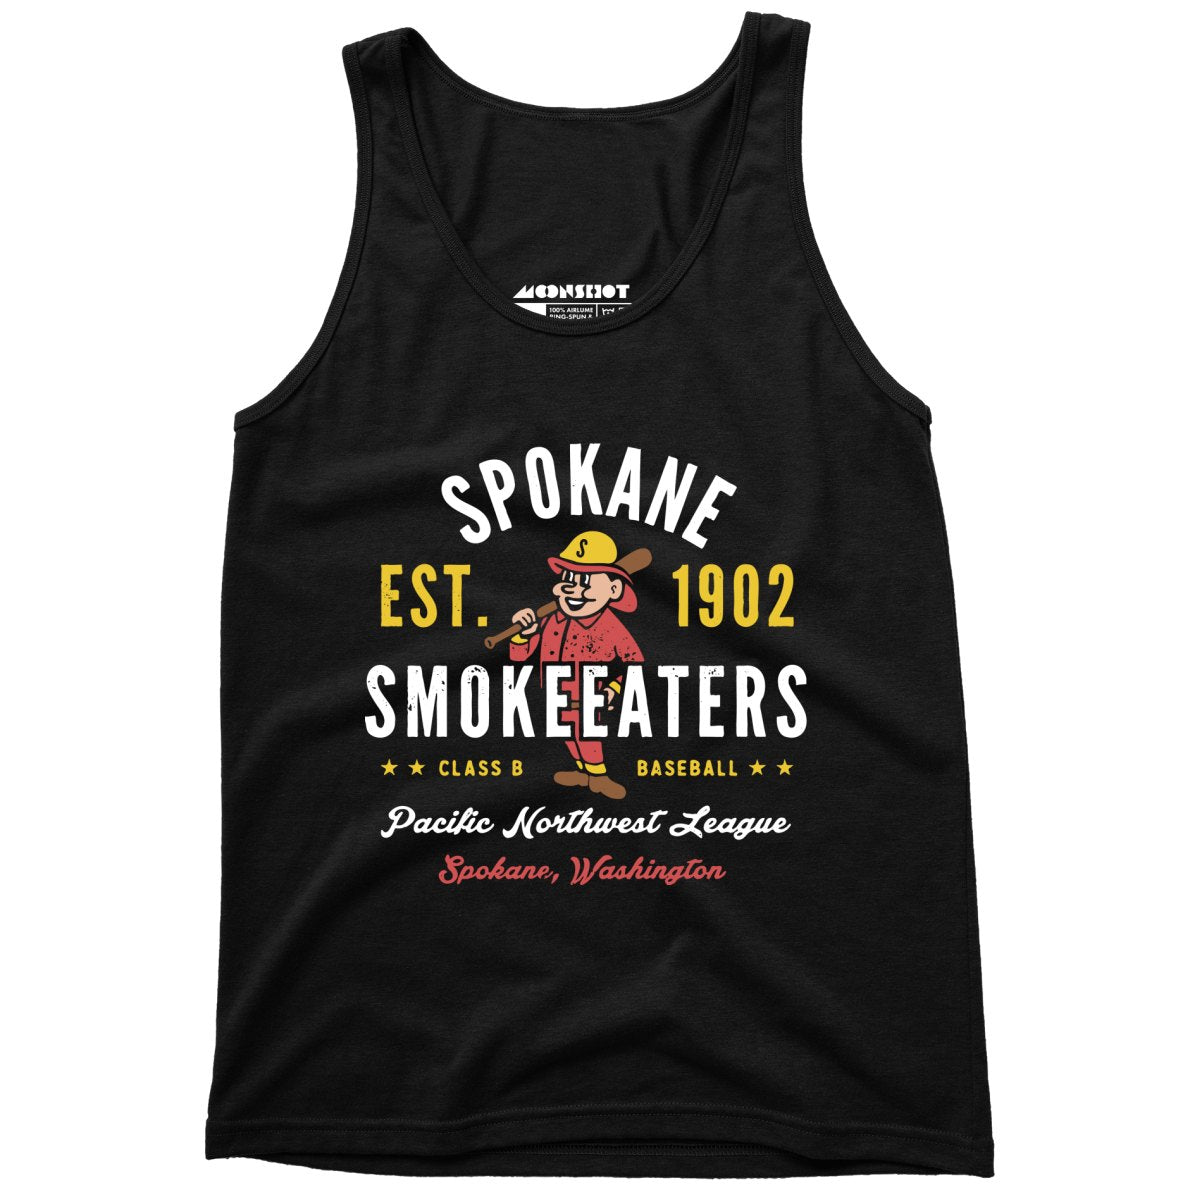 Spokane Smoke Eaters - Washington - Vintage Defunct Baseball Teams - Unisex Tank Top